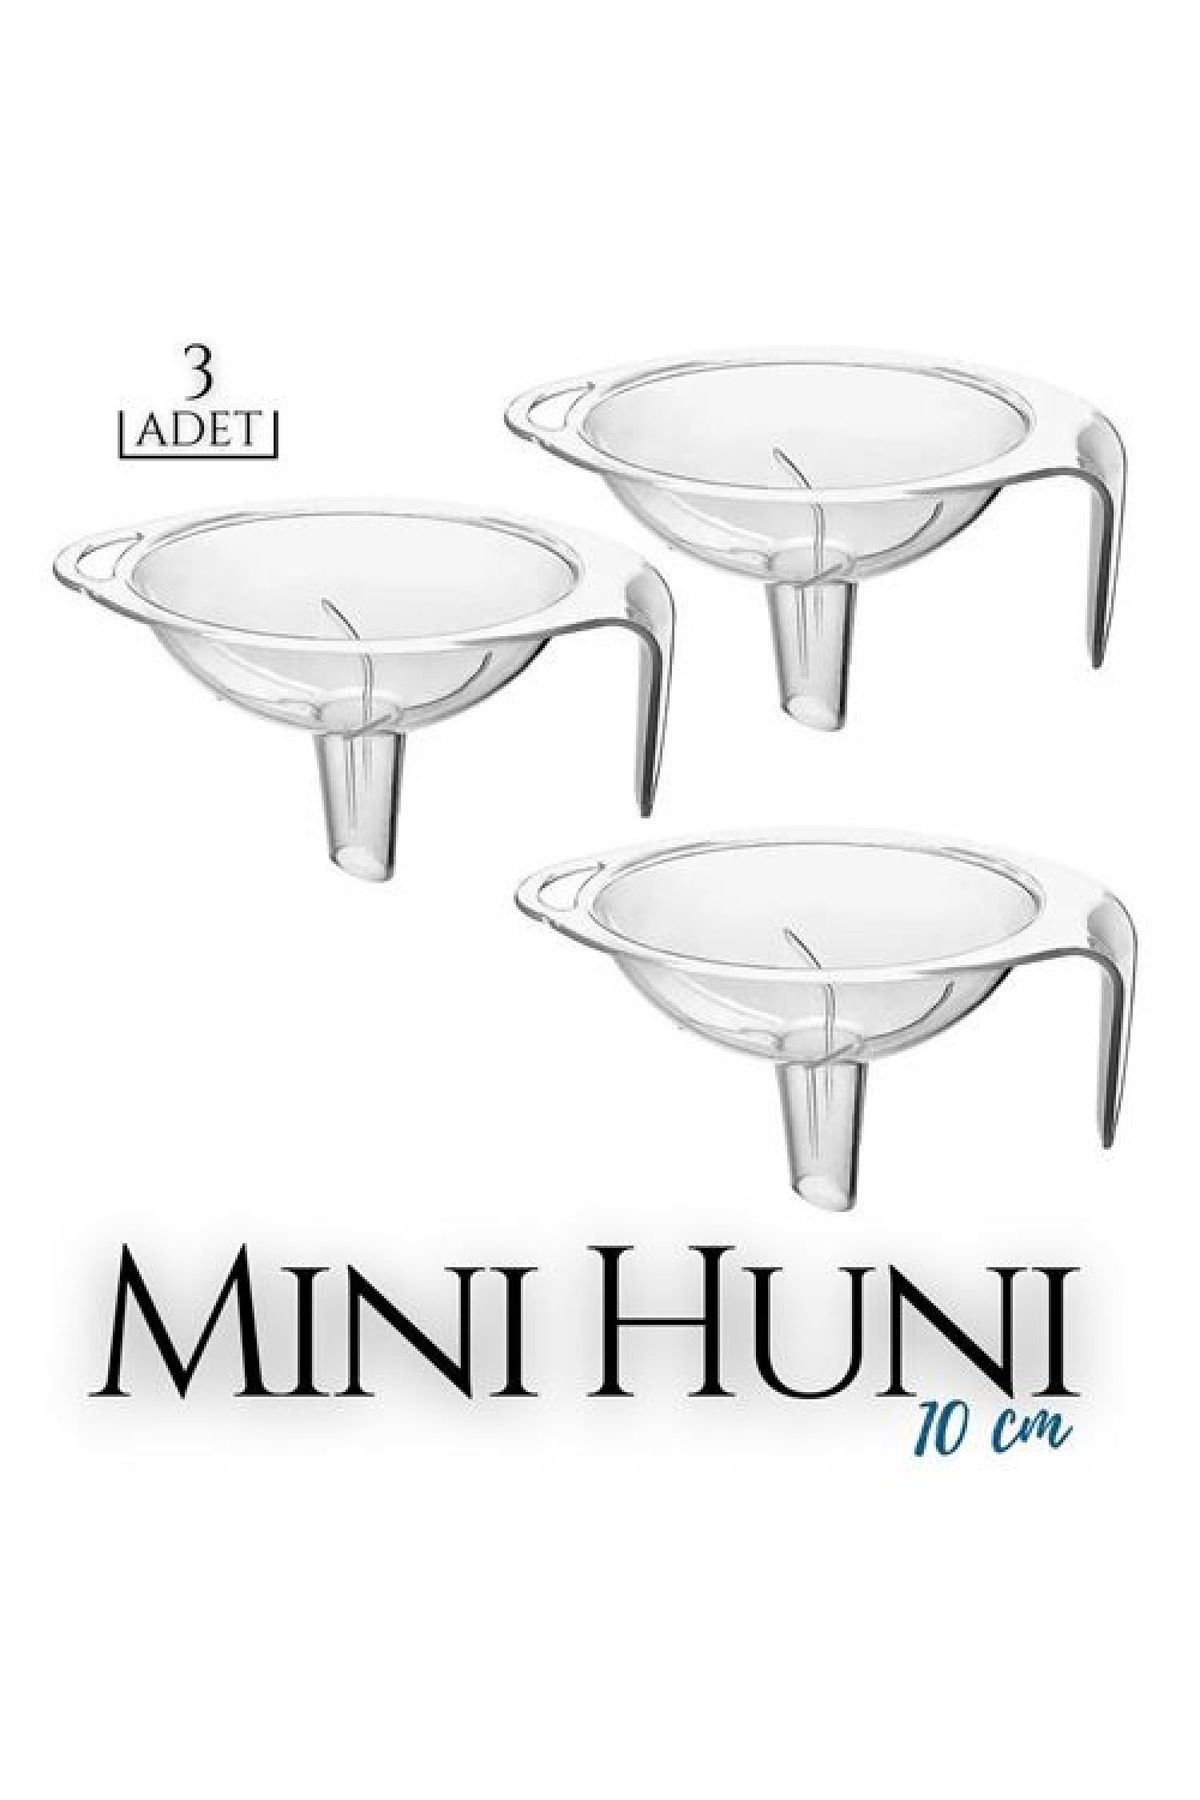 Transformacion Mini Huni 3 lü Set Zinsmeister Design 718895